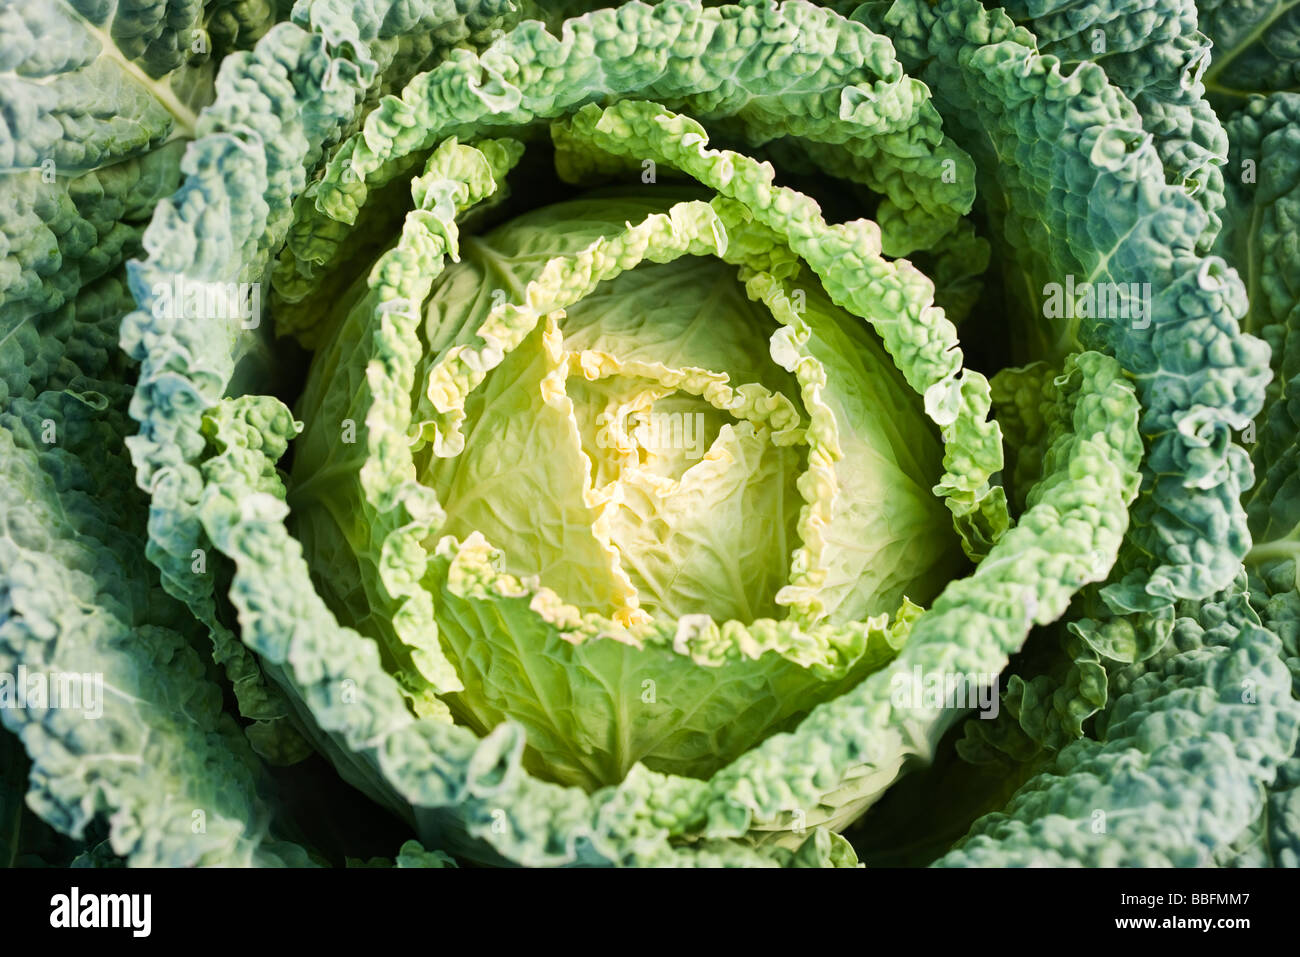 Savoy cabbage, close-up Stock Photo